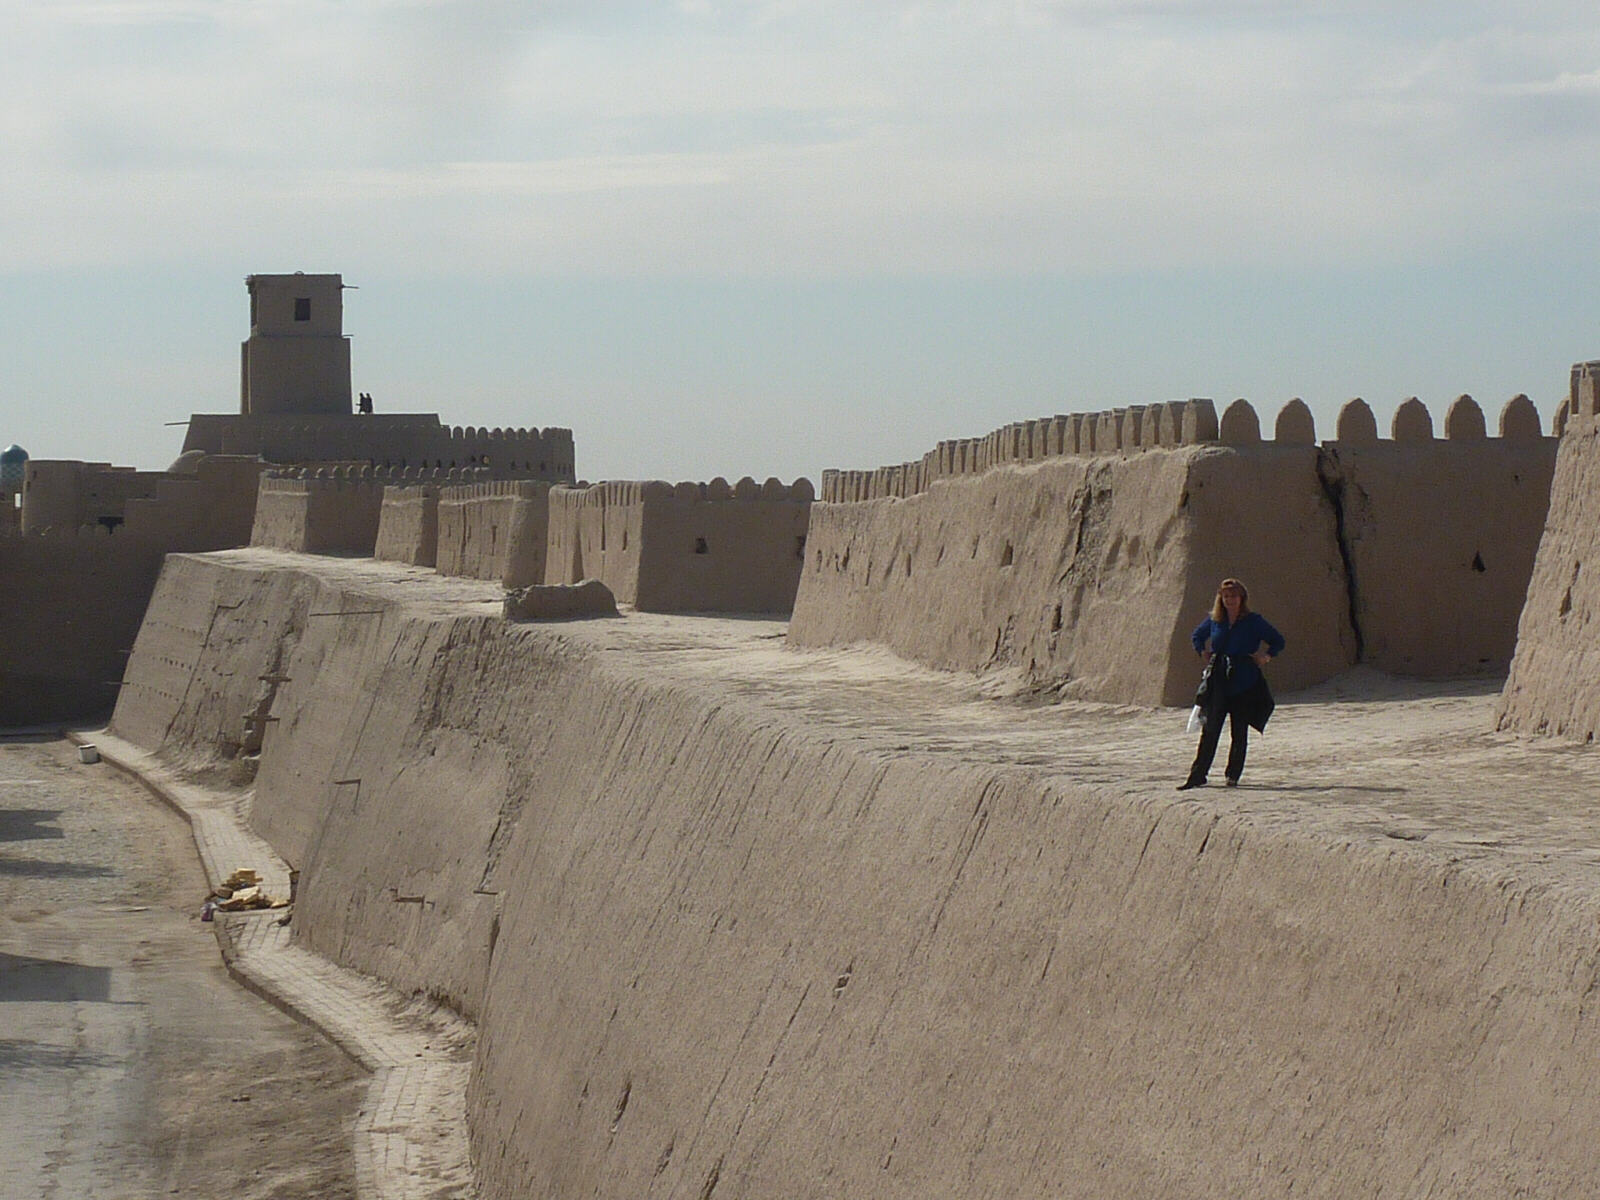 The north-west city wall of Khiva, Uzbekistan